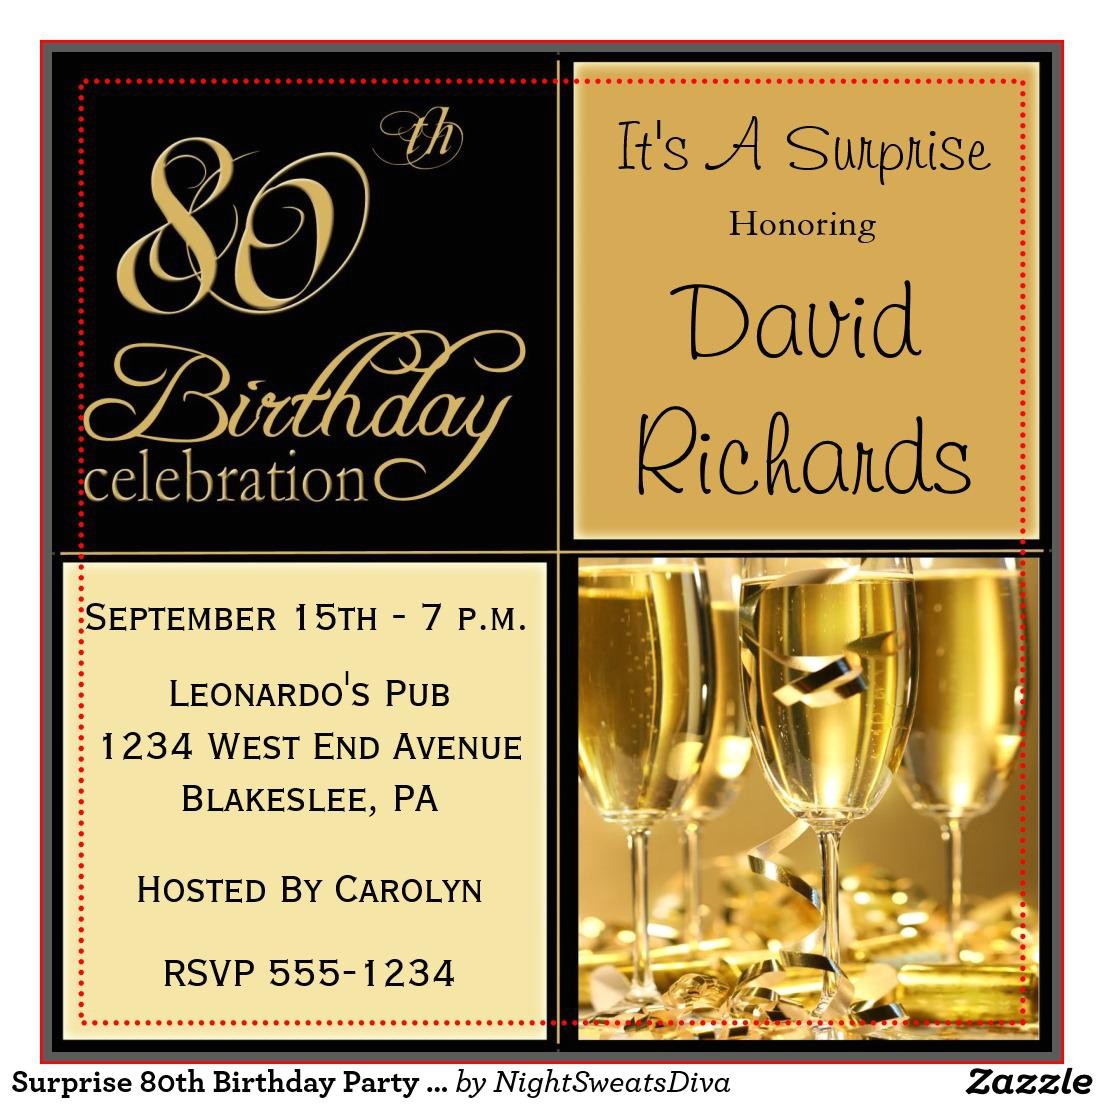 15 sample 80th birthday invitations templates ideas free sample